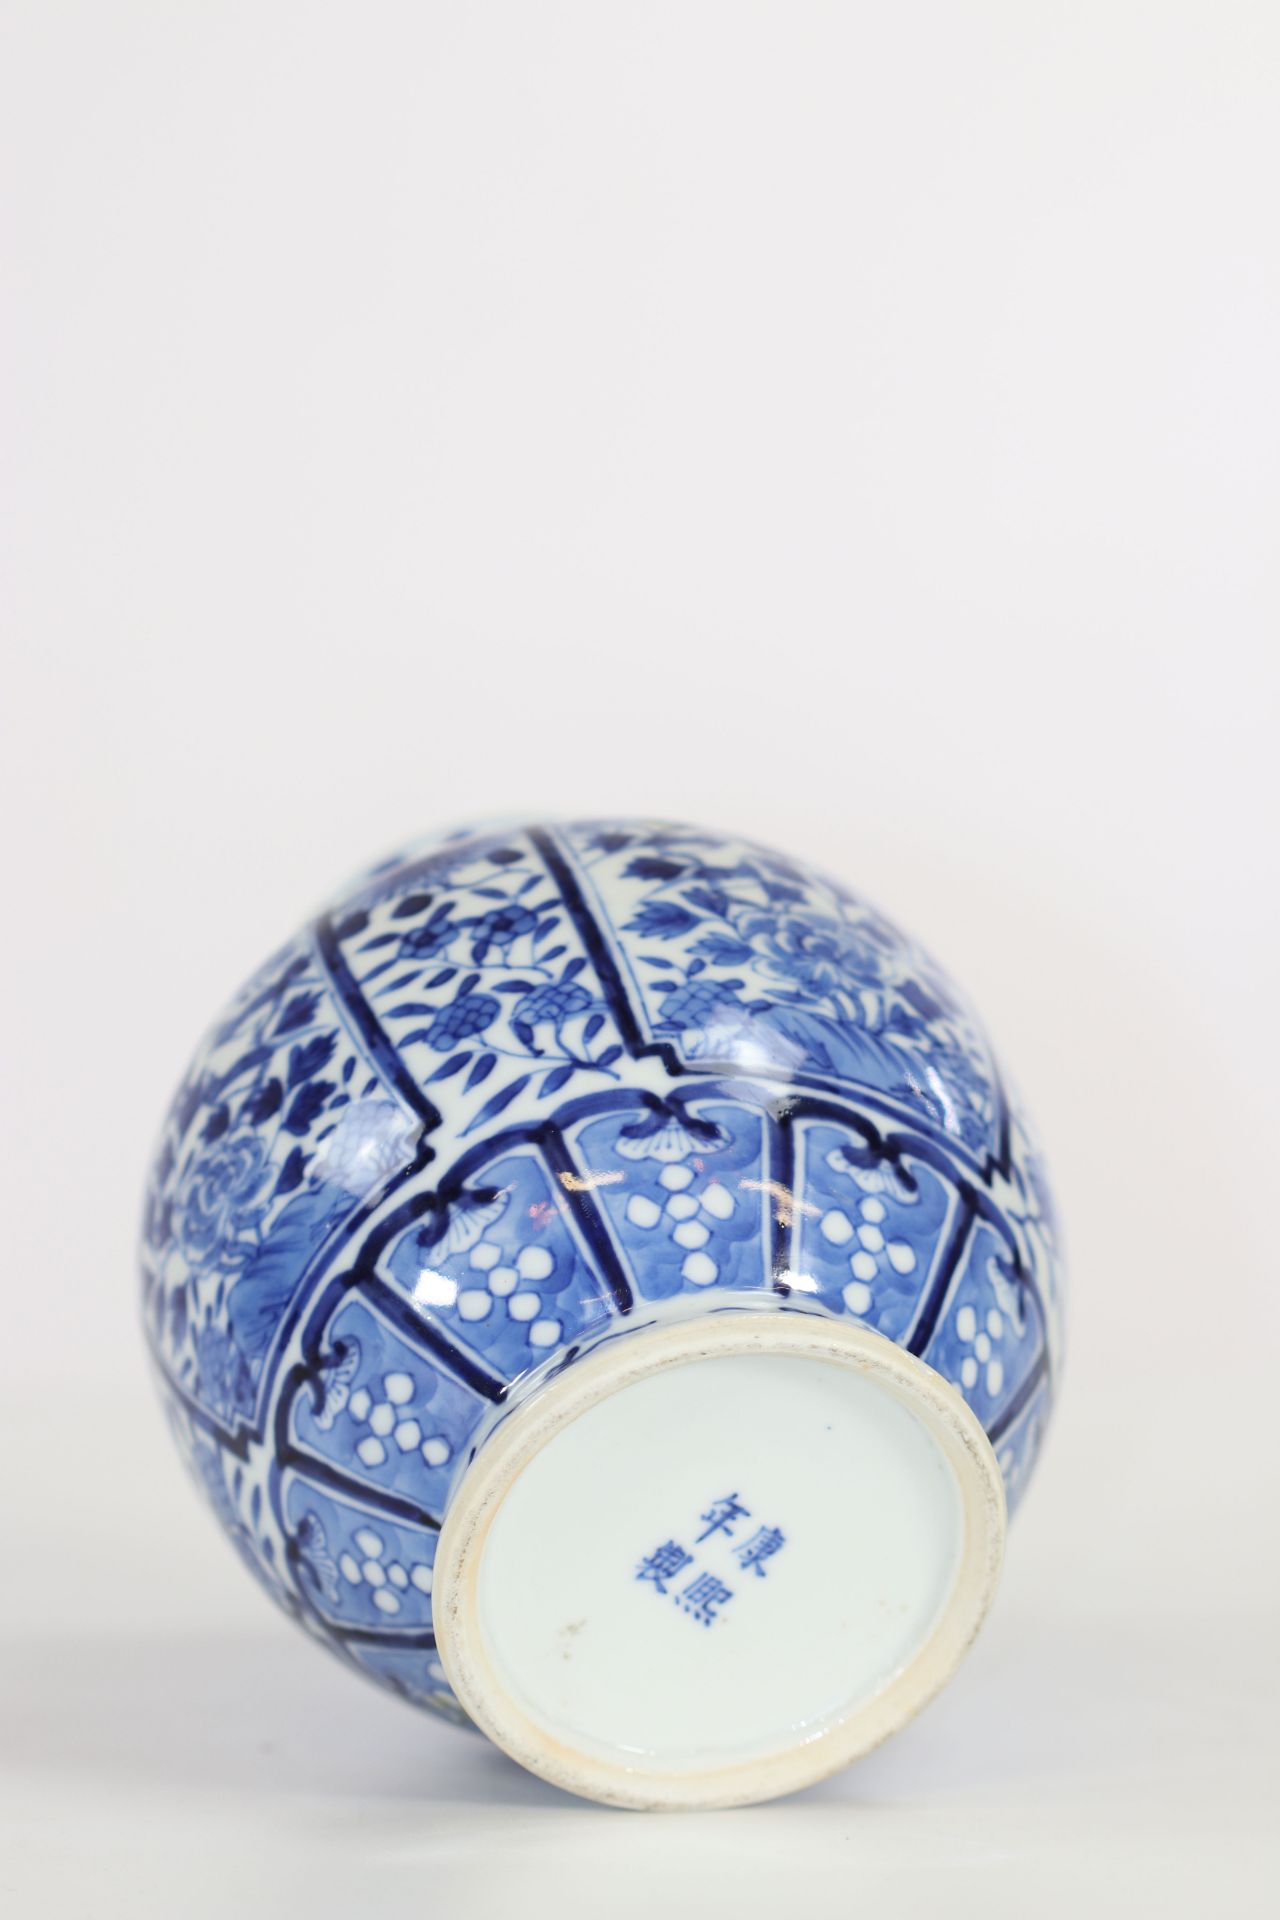 China blanc-bleu porcelain vase vegetable decor Qing dynasty 4 character mark - Image 4 of 4